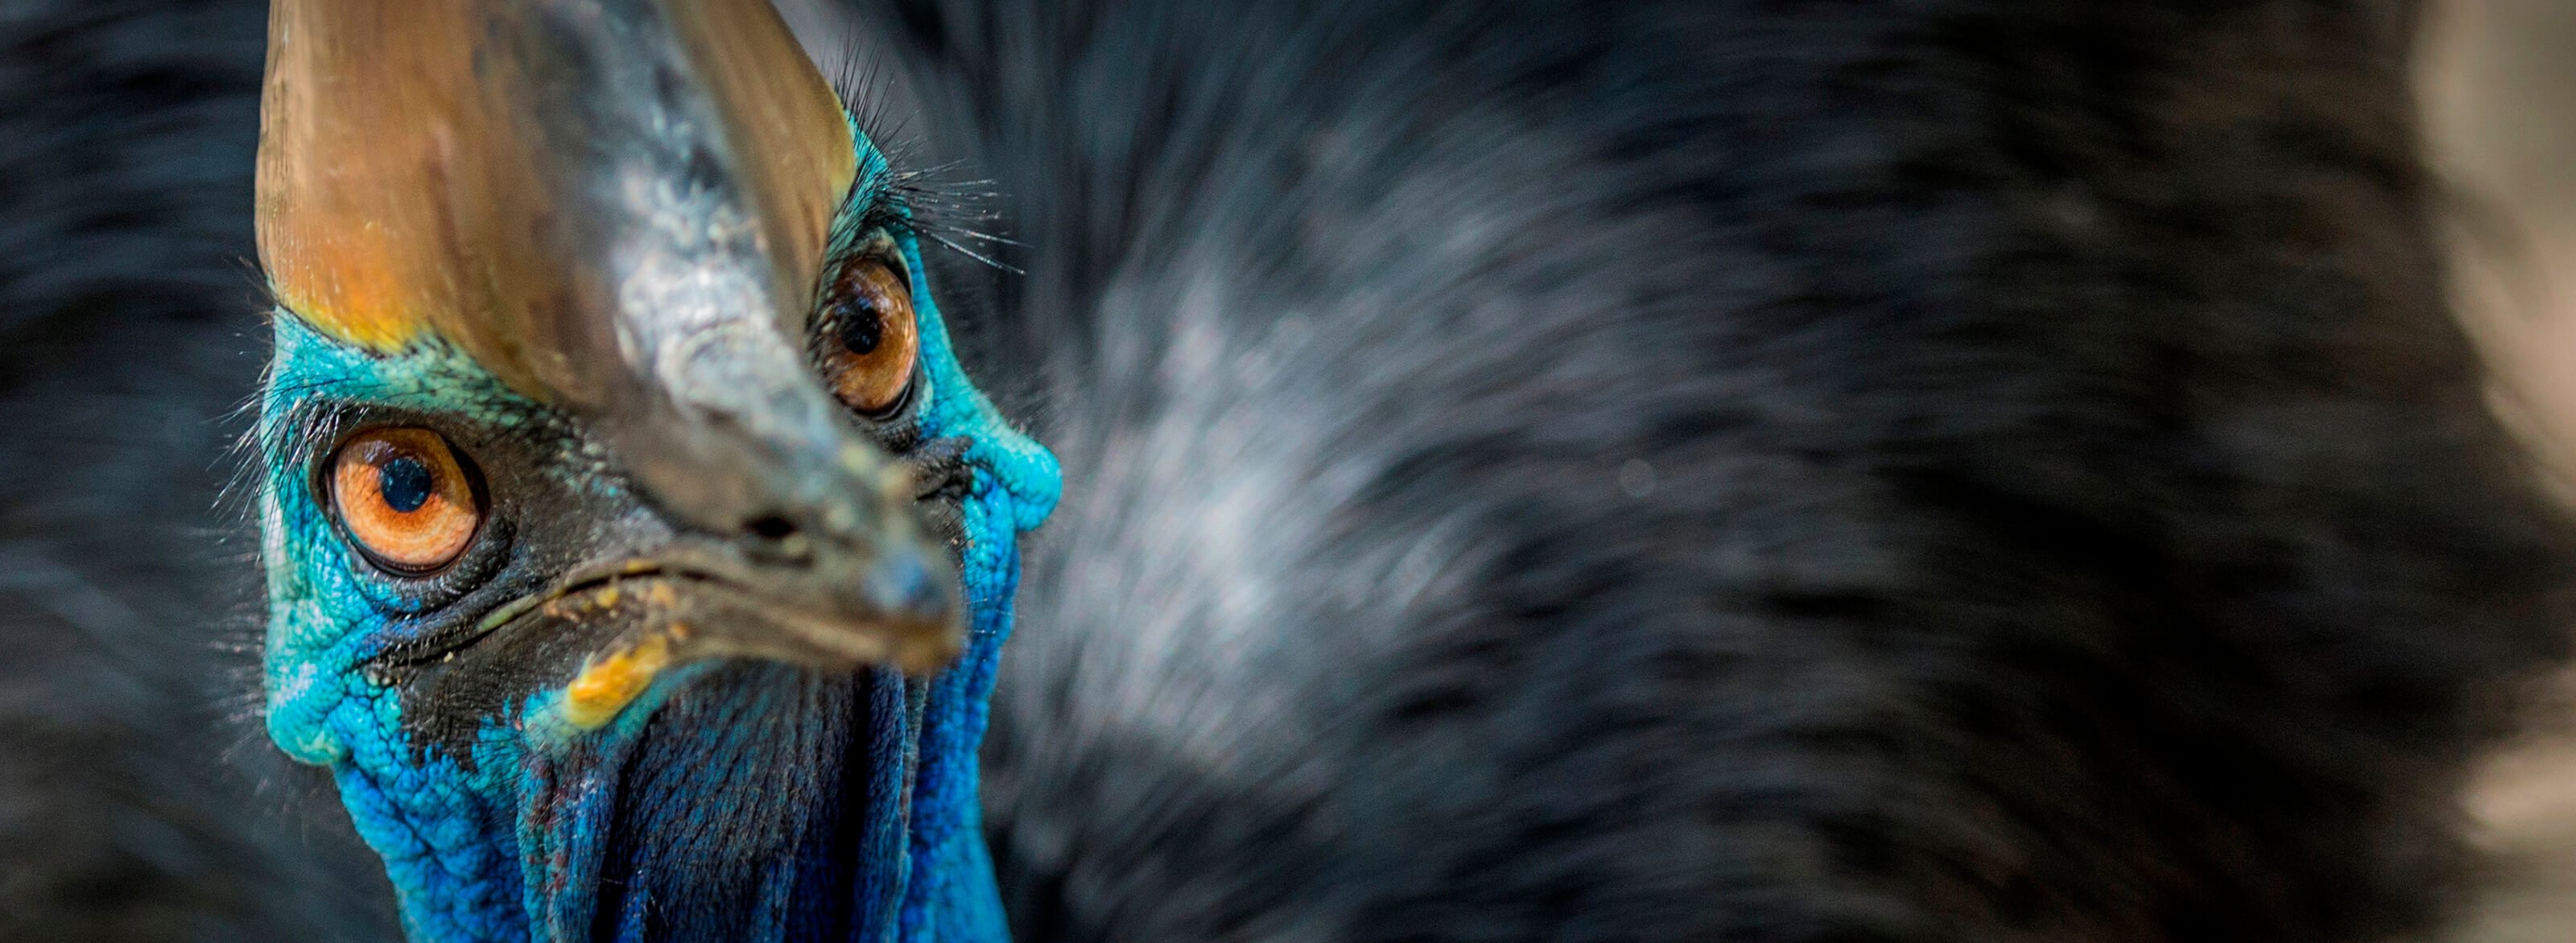 A southern cassowary close up